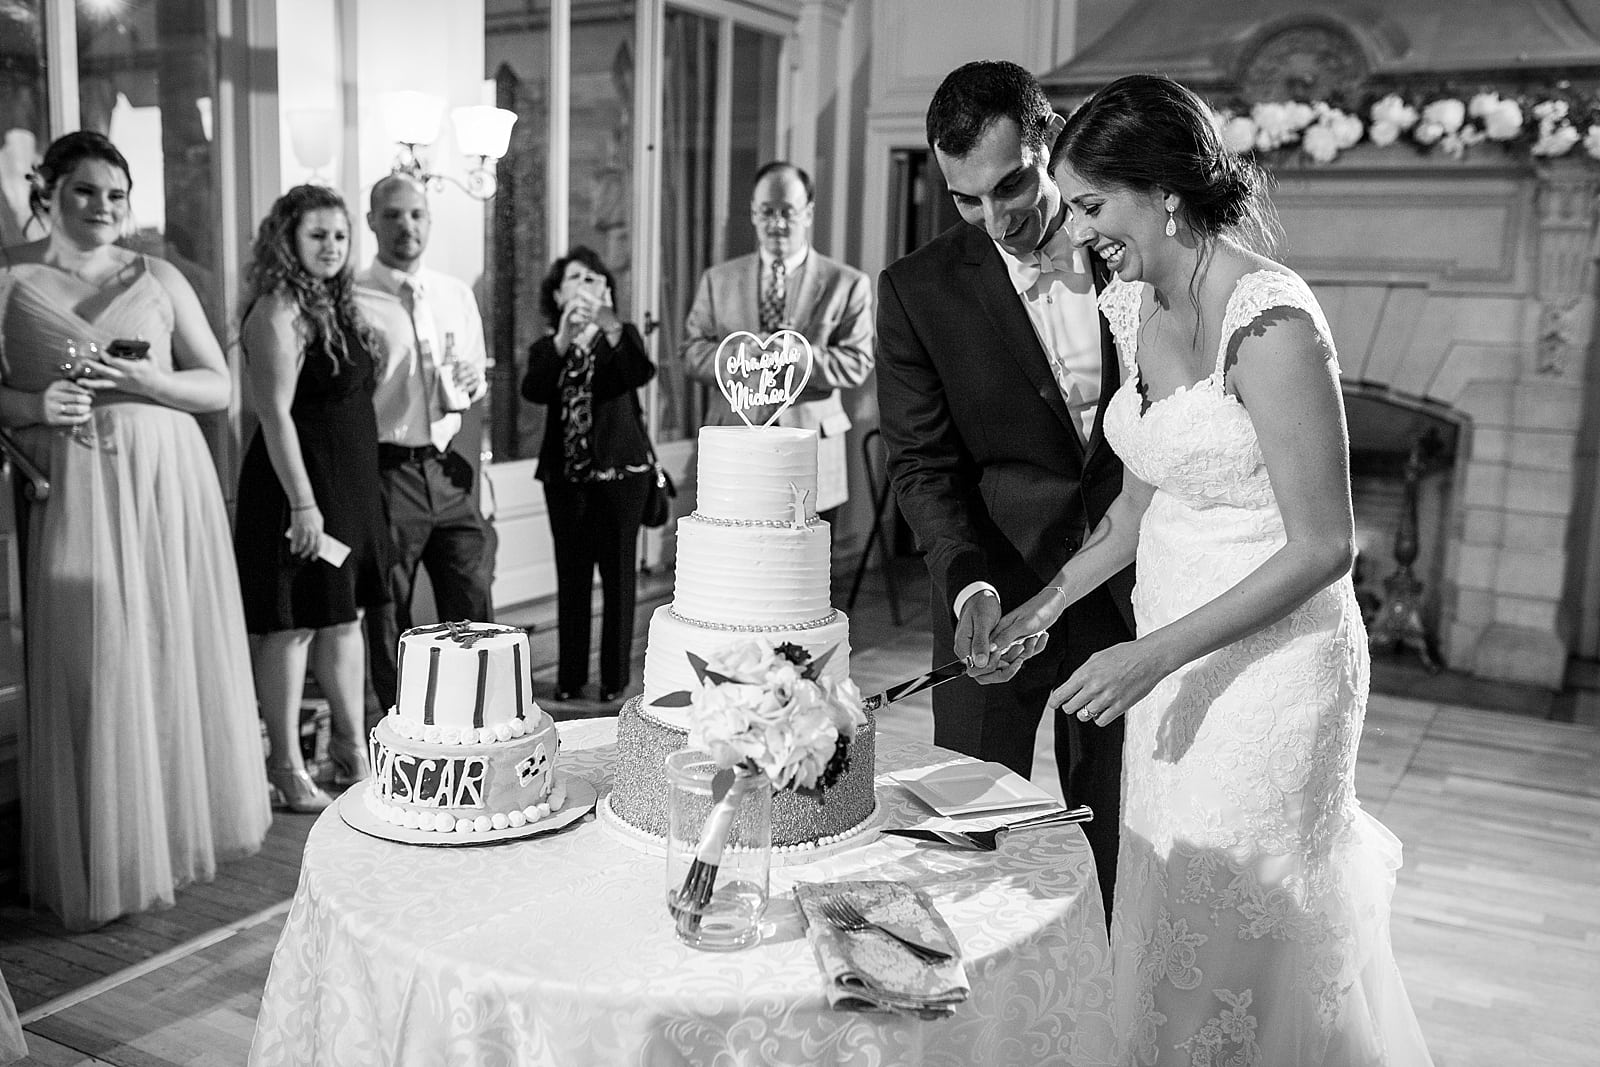 Cake cutting, wedding cake cutting, black and white, husband and wife, cake topper